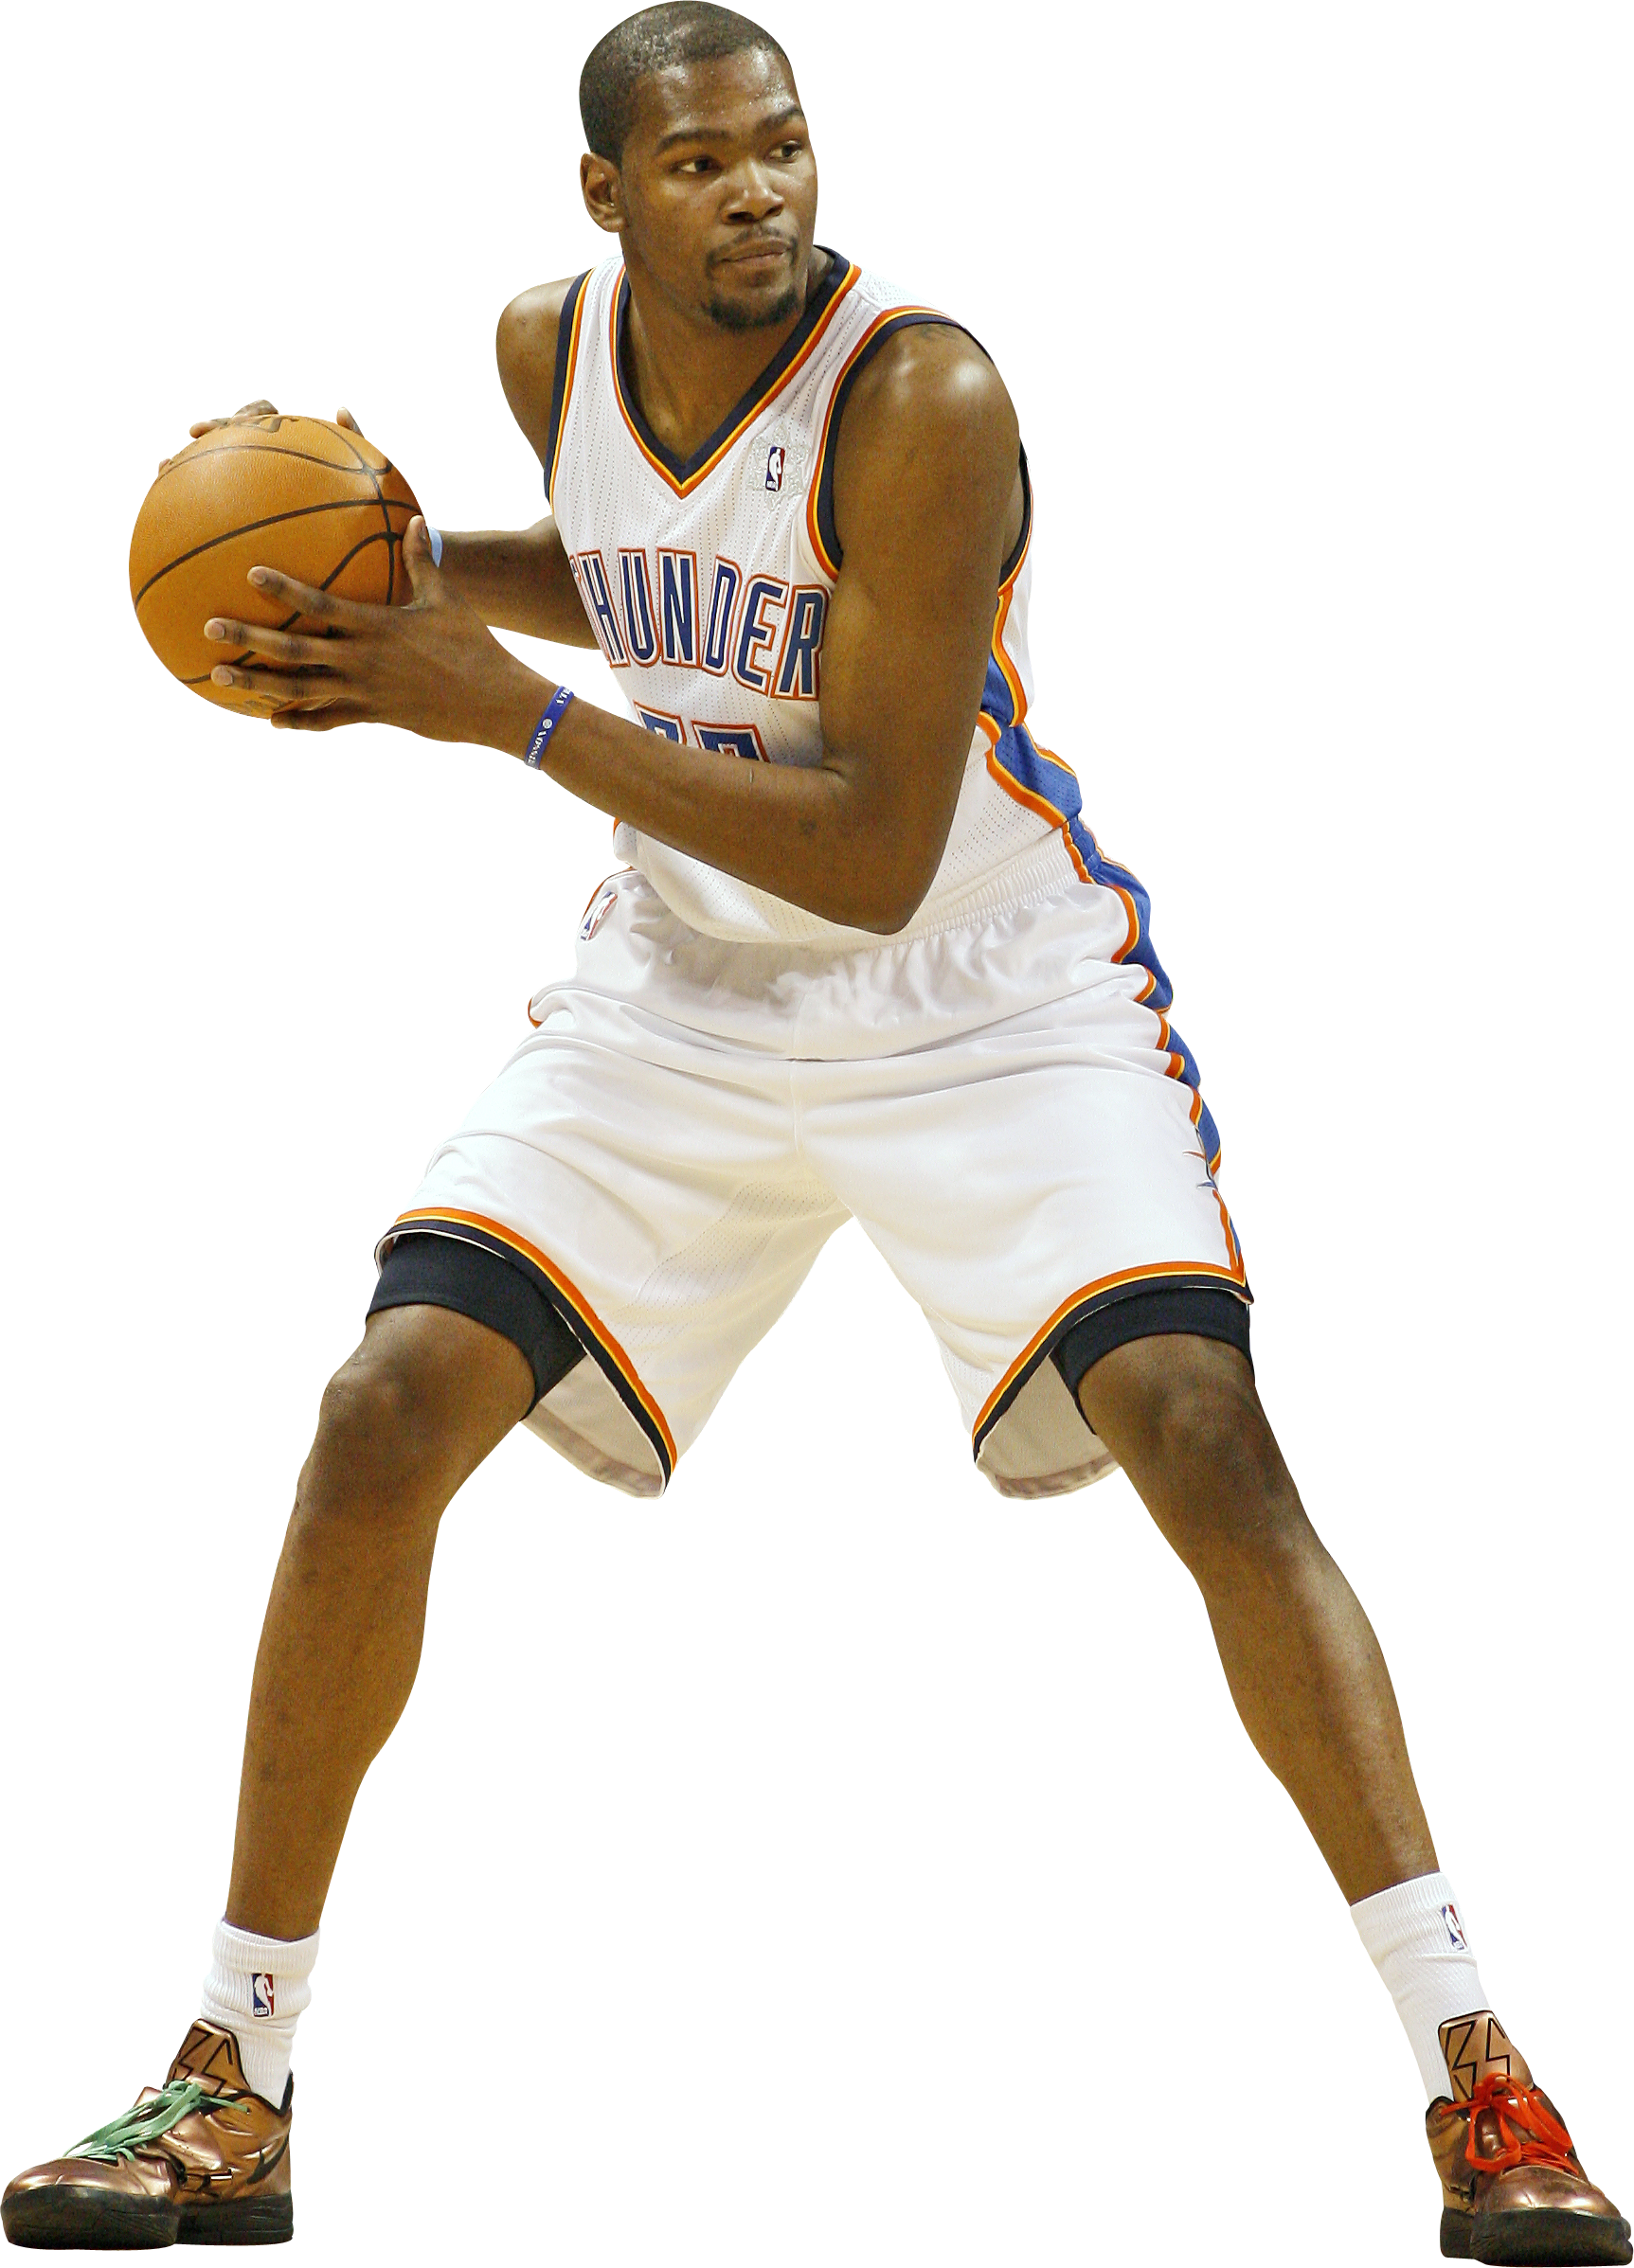 A Man In Basketball Uniform Holding A Basketball